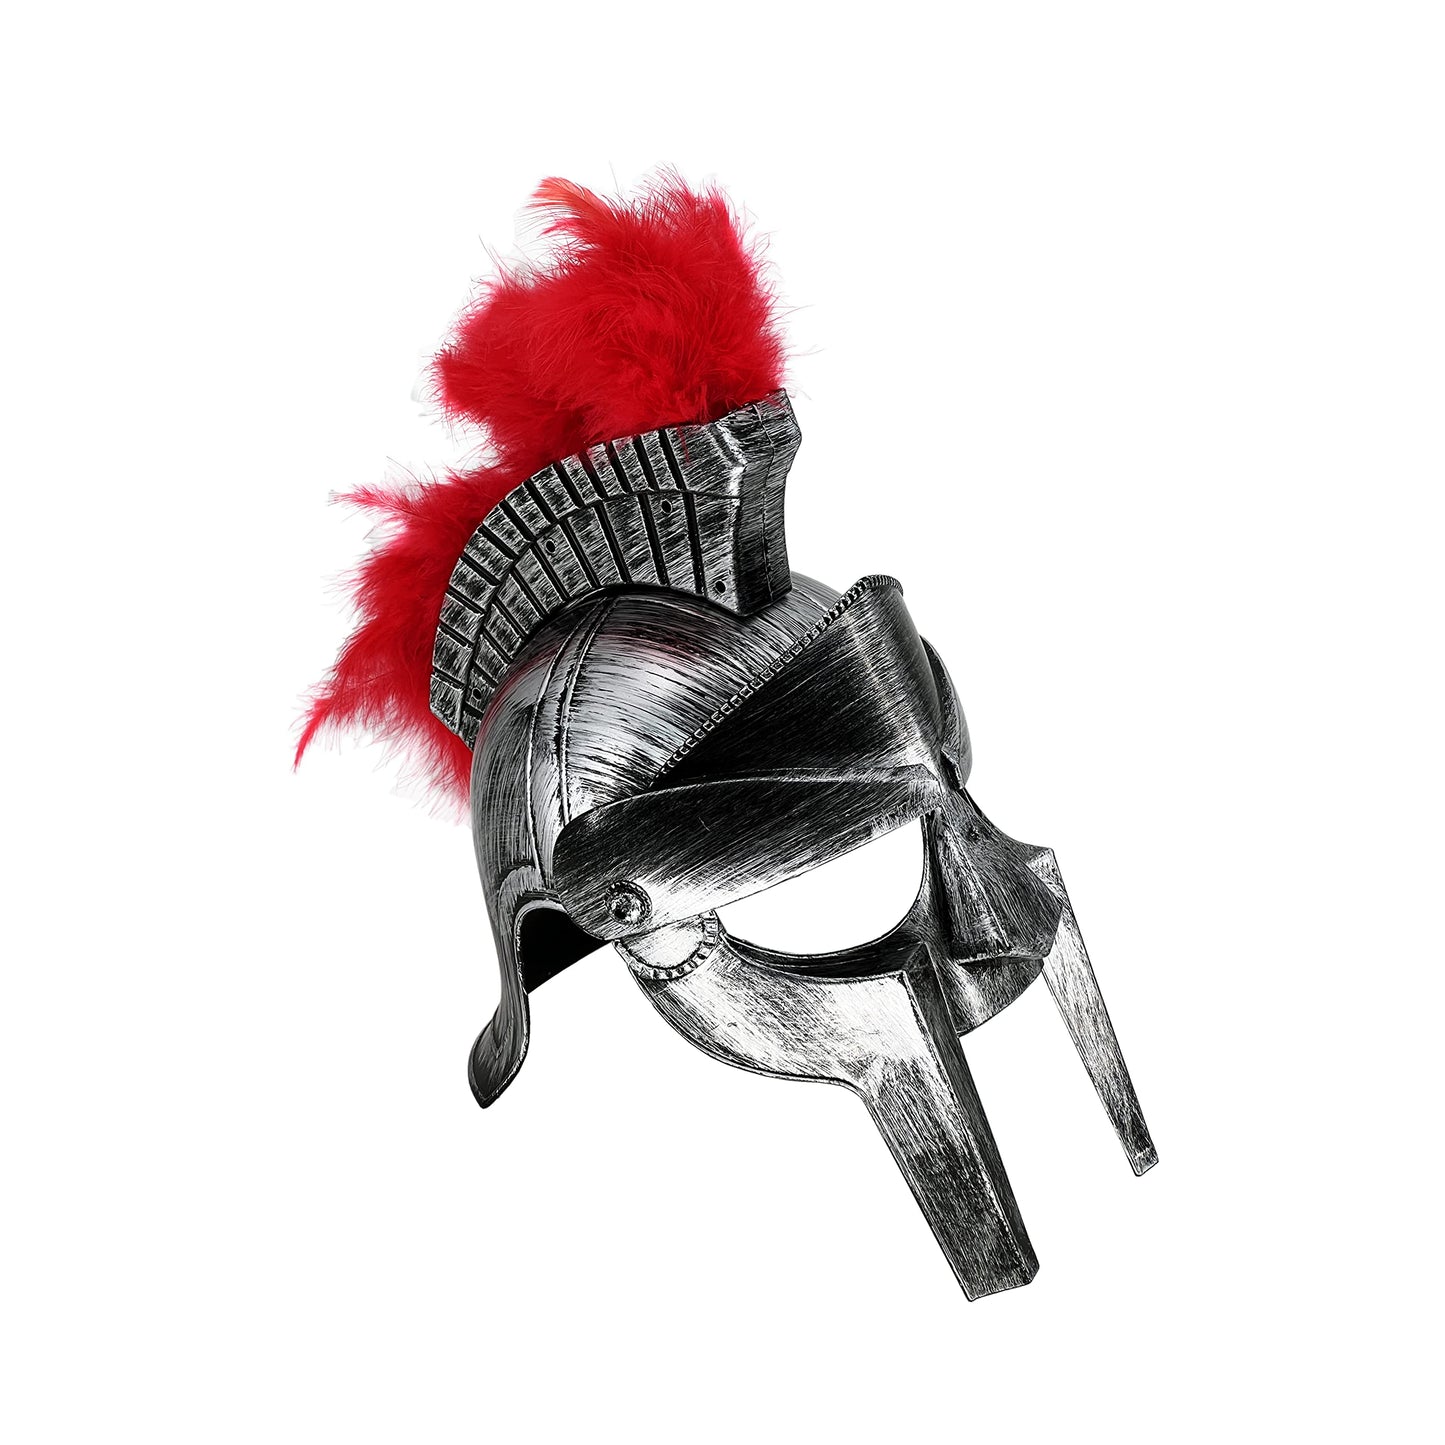 Ancient Roman Spartan Gladiator Helmet Costume Accessory for Battle Play Halloween Cosplay LARP Red Tassel